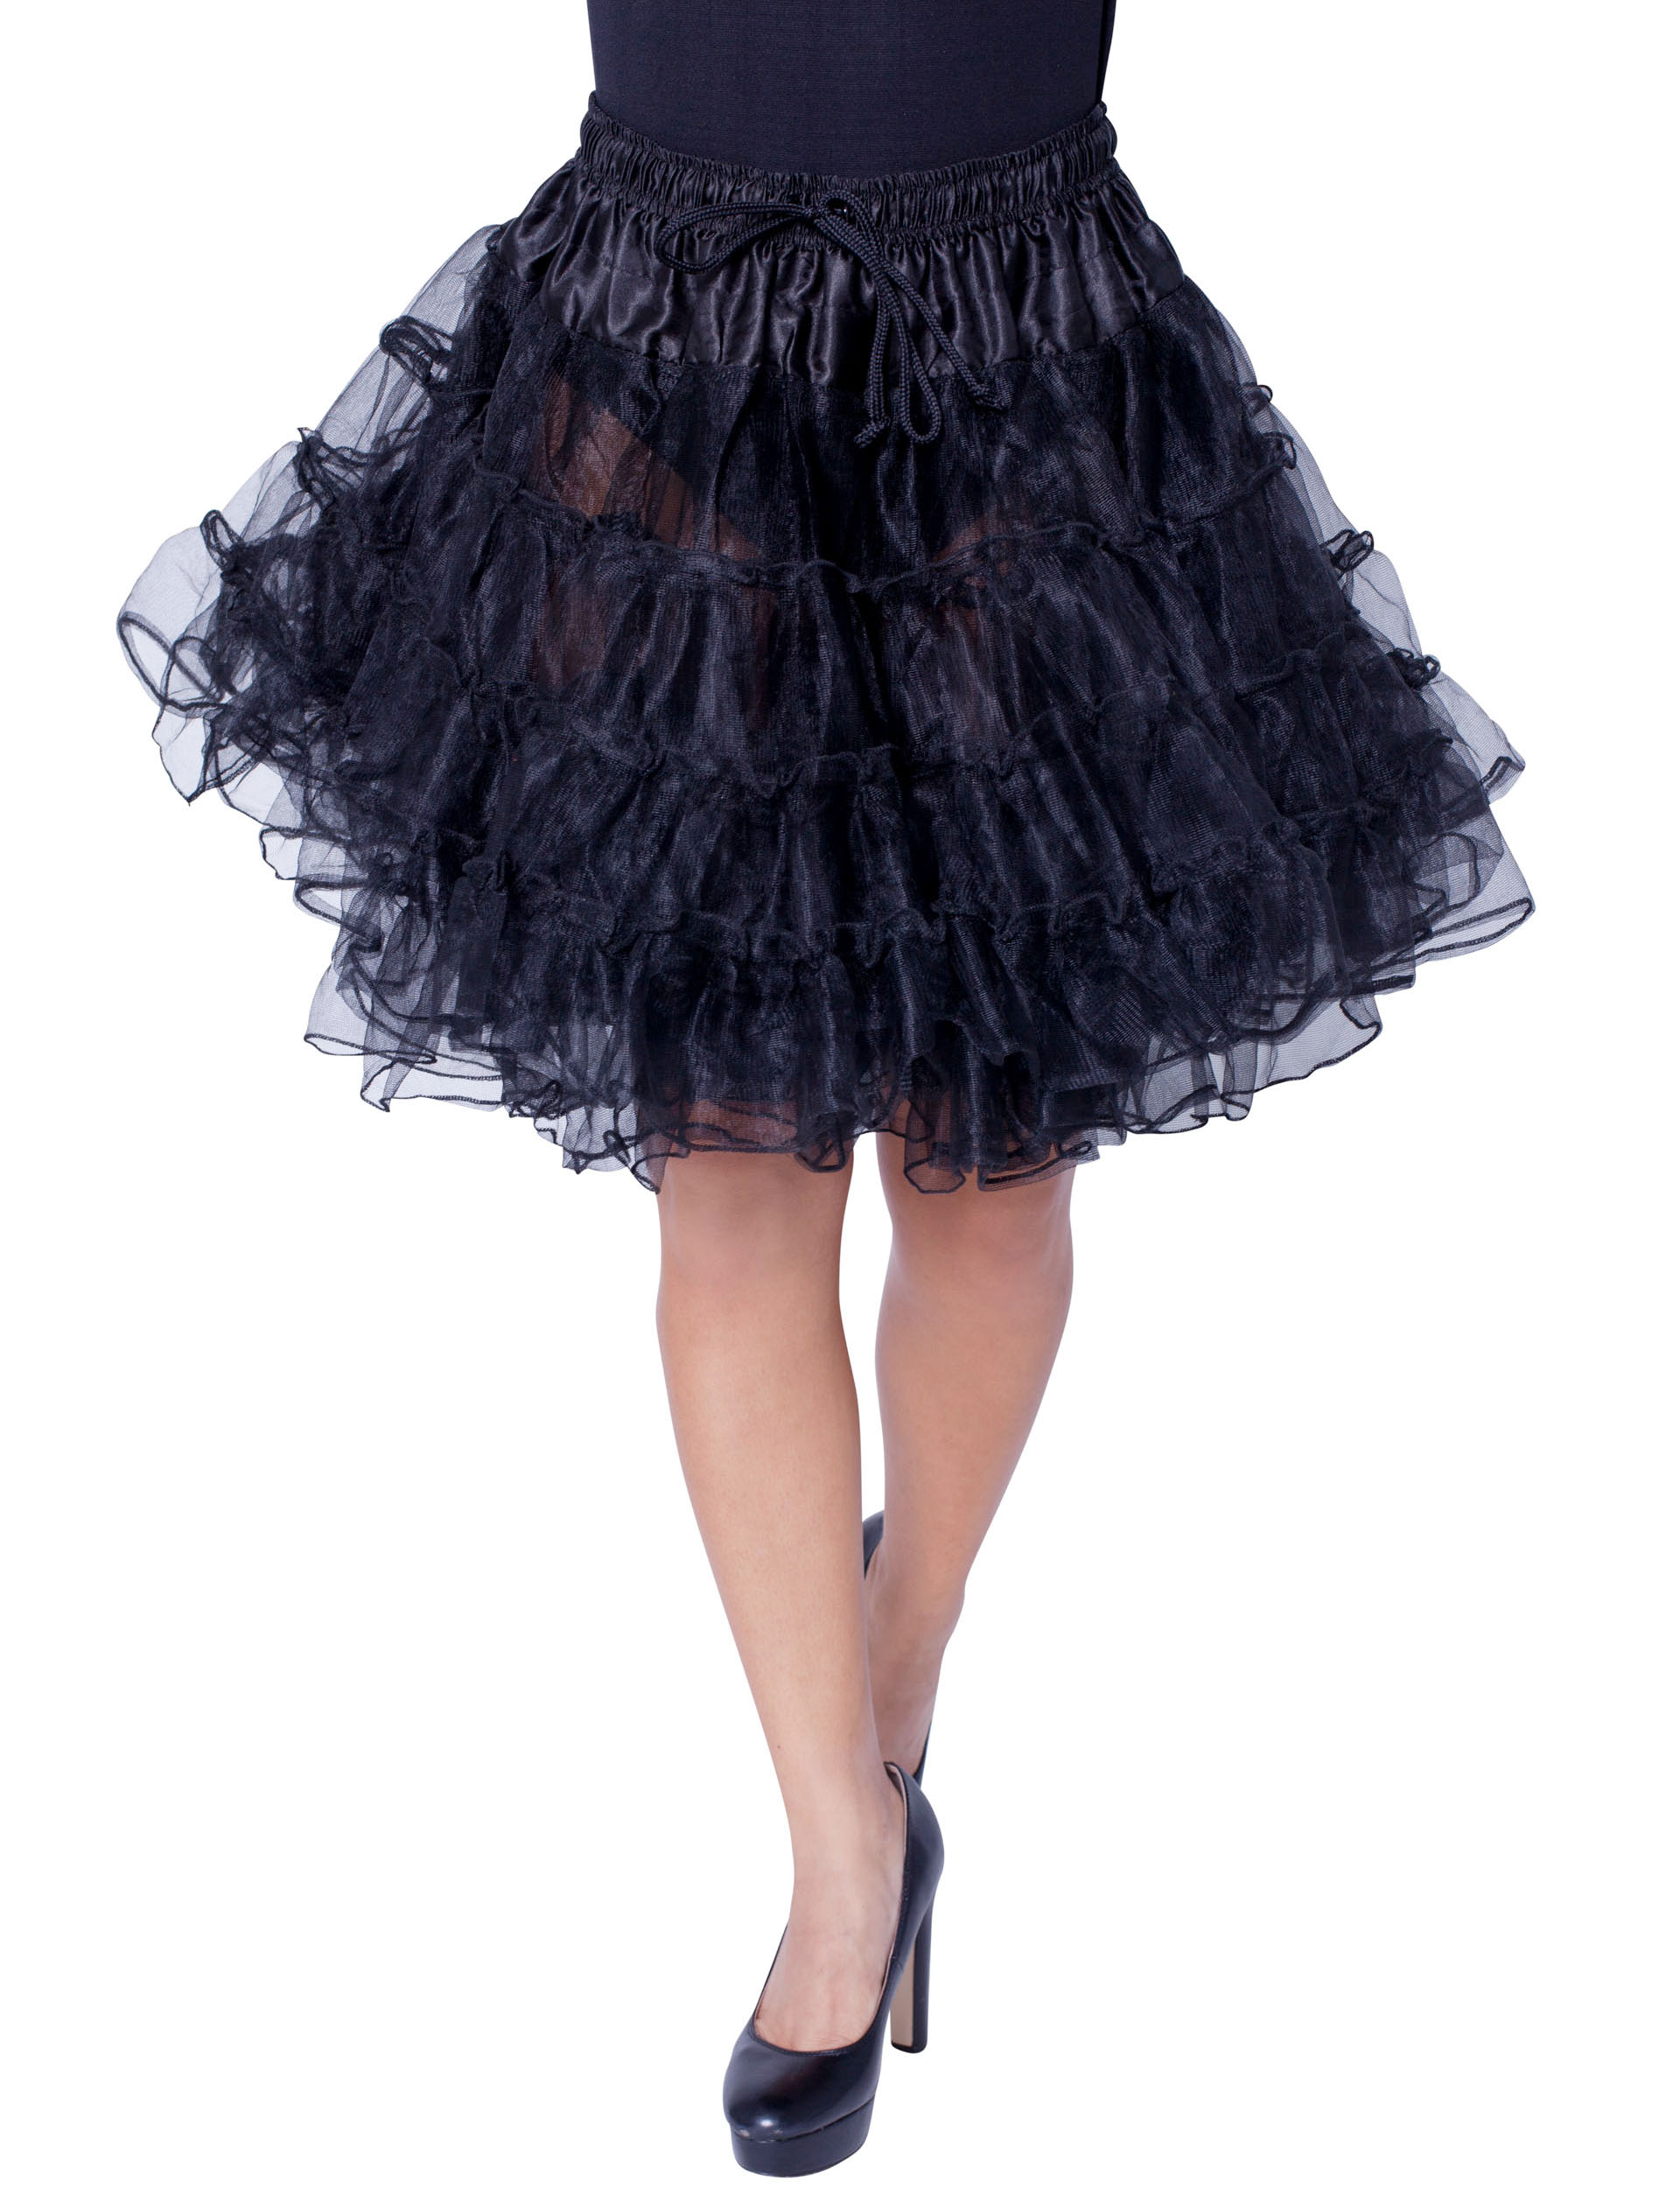 Petticoat de luxe schwarz one size